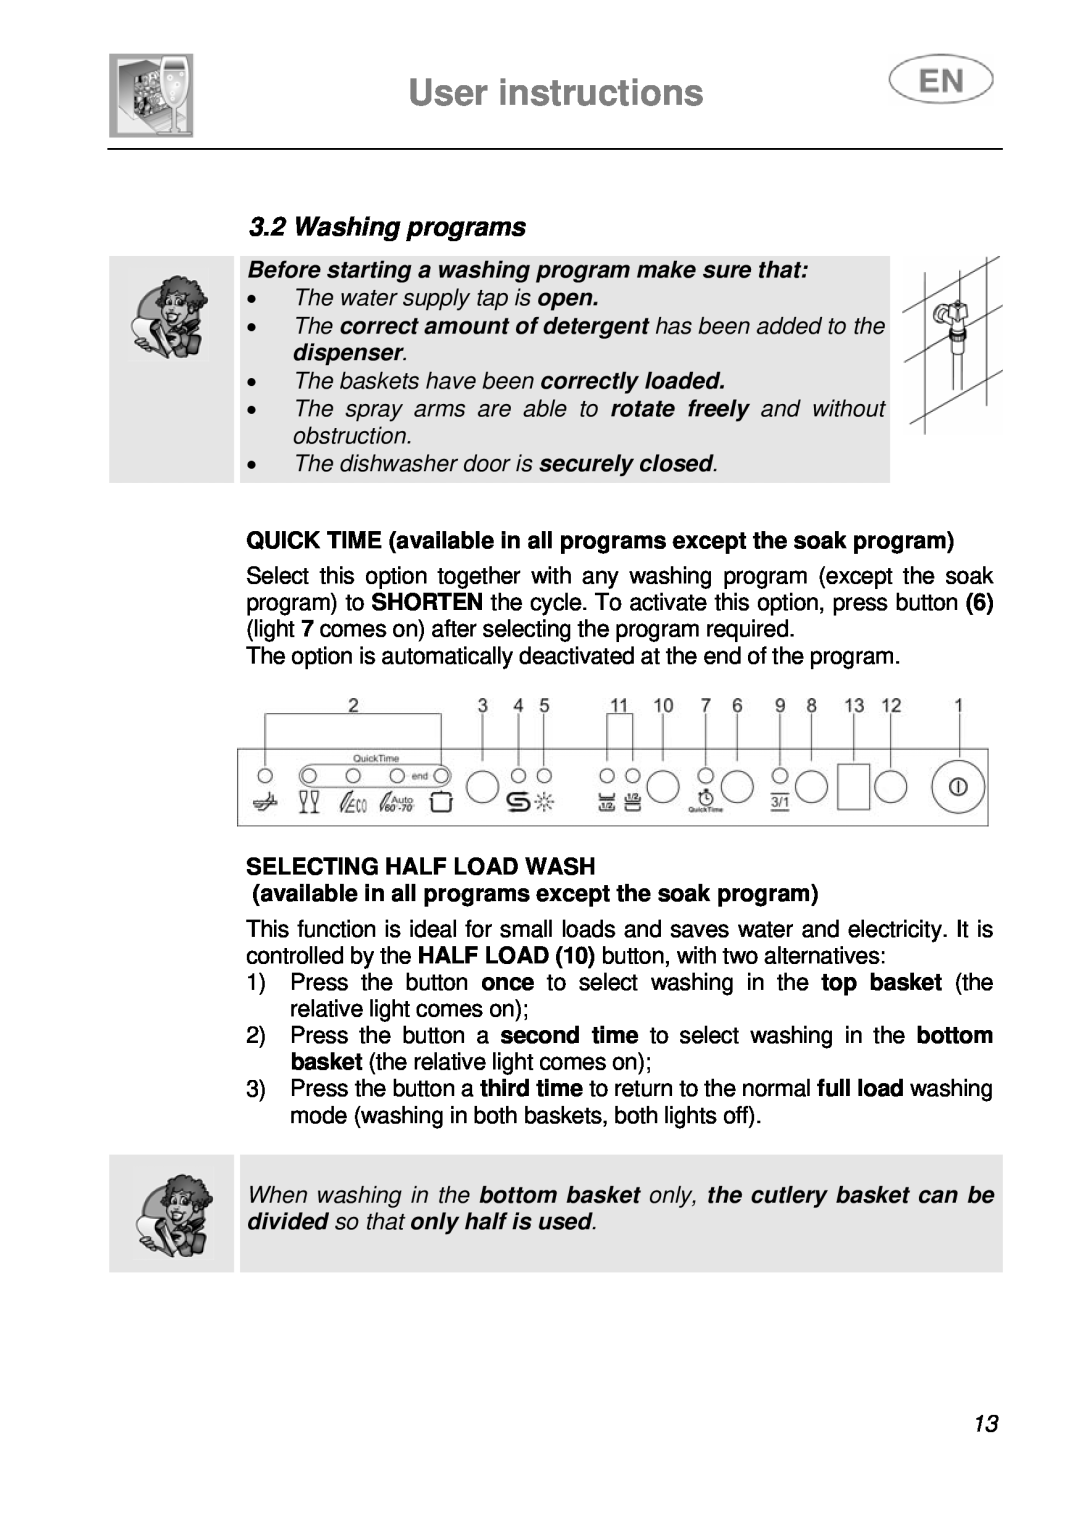 Smeg DI612A1 instruction manual User instructions, Washing programs, Before starting a washing program make sure that 